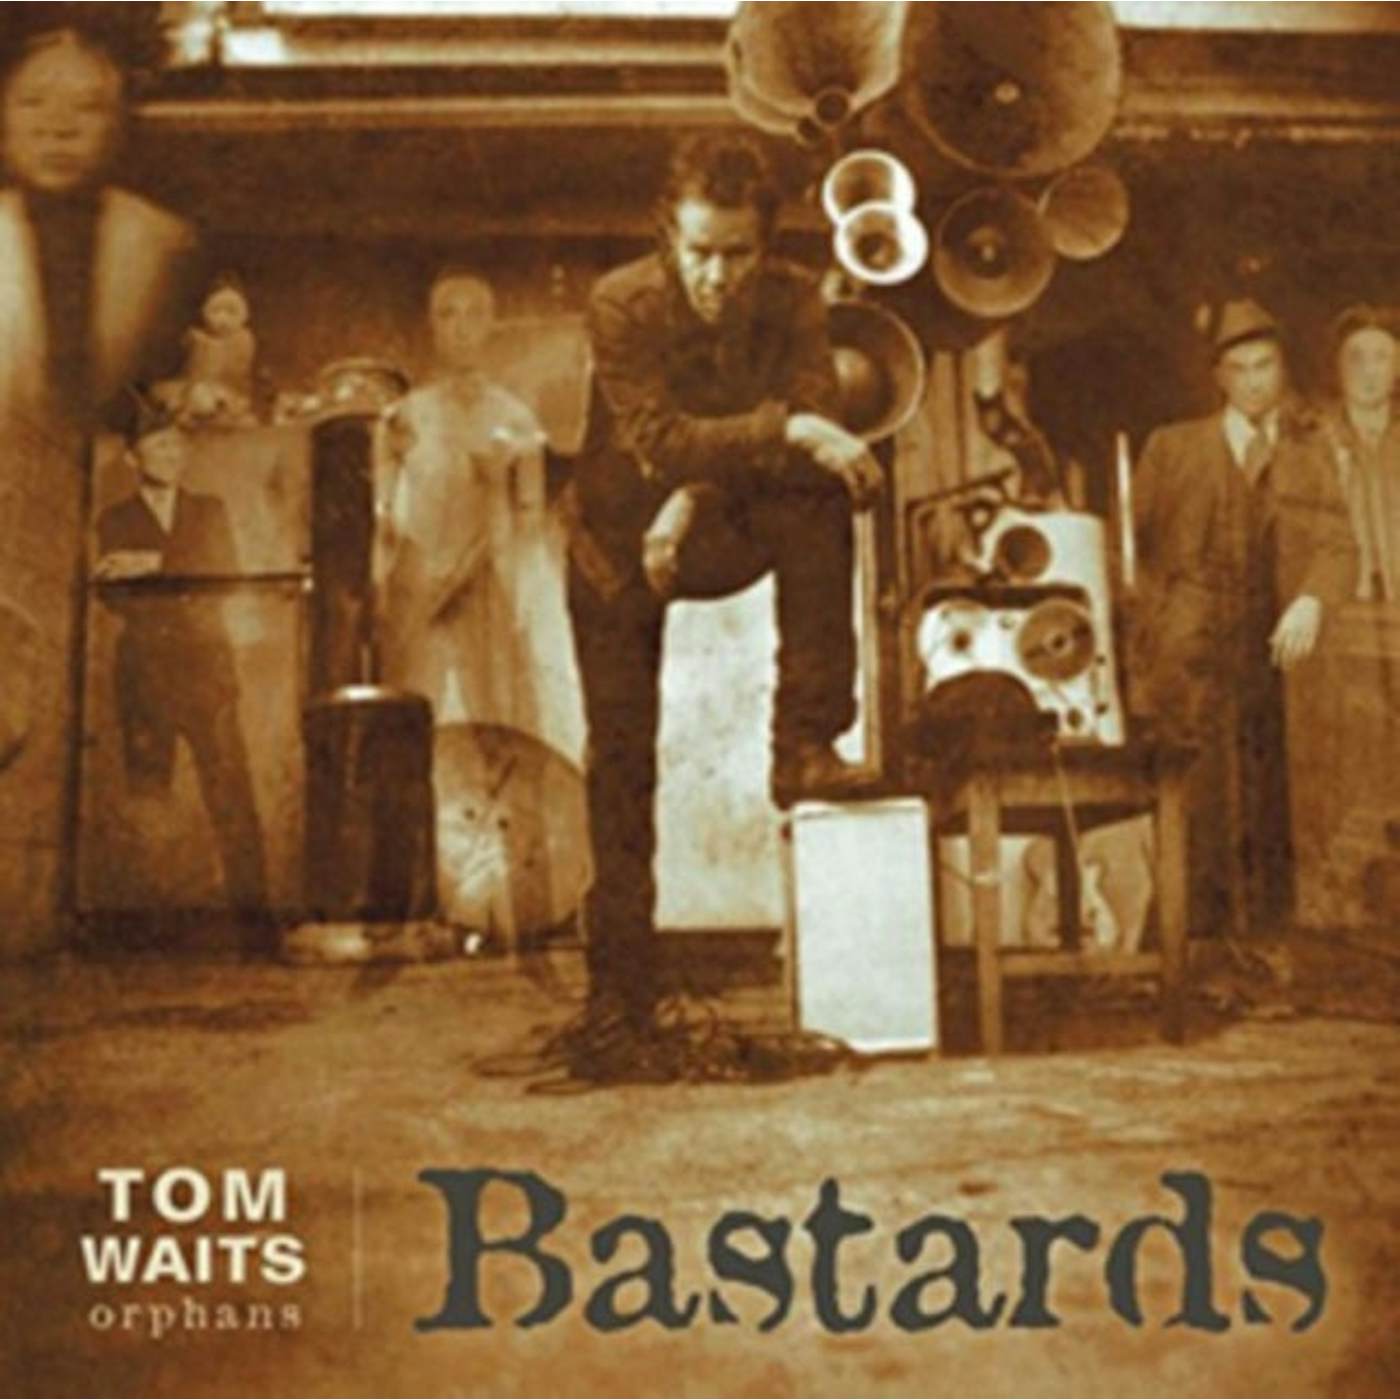 Tom Waits LP Vinyl Record - Bastards (Remastered Edition)